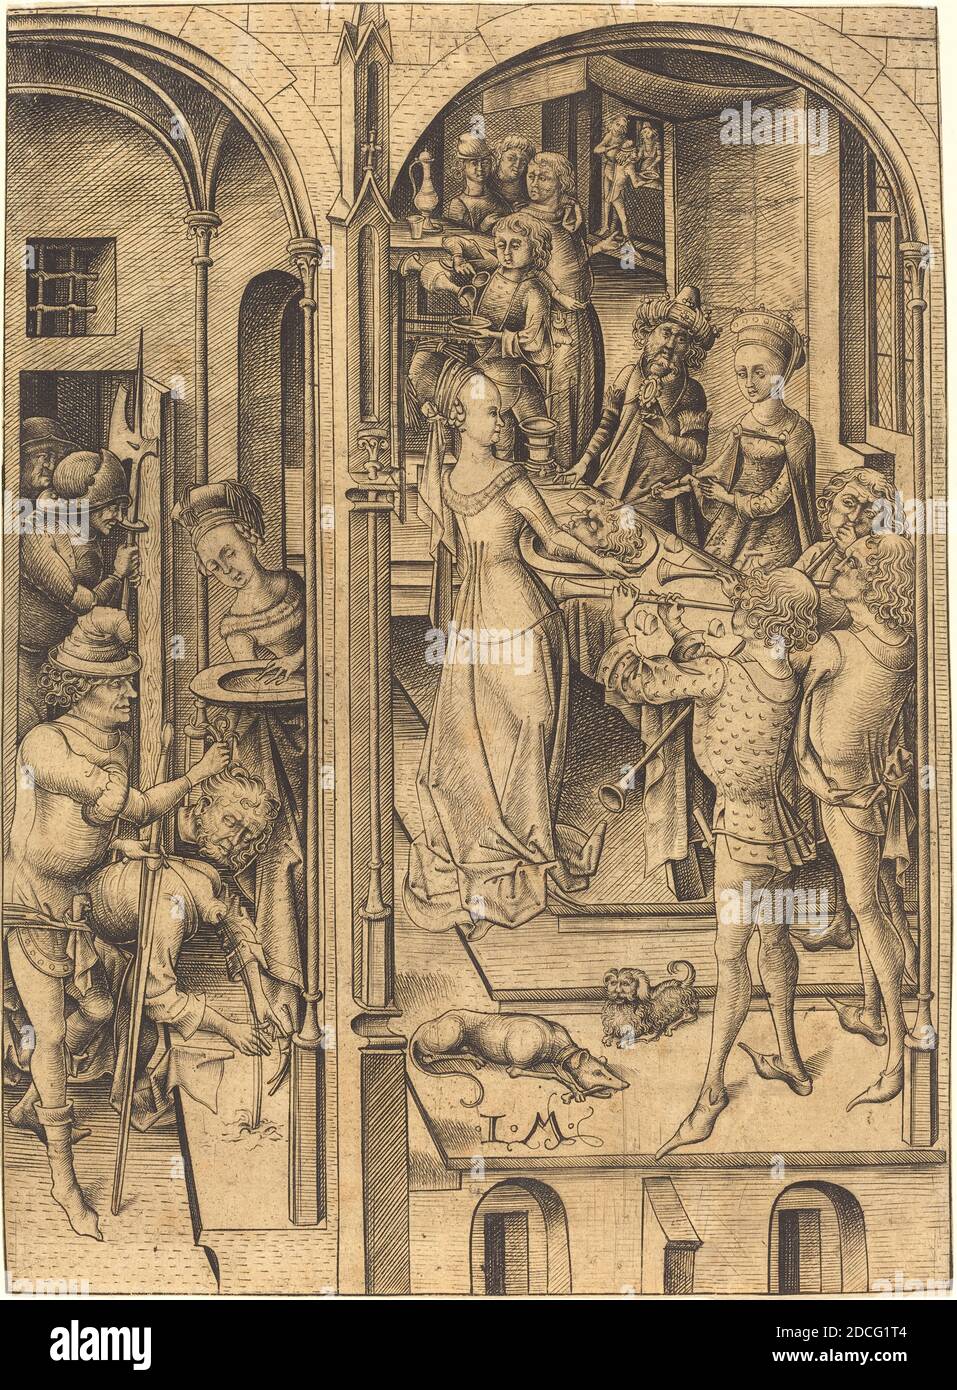 Israhel van Meckenem, (artist), German, c. 1445 - 1503, Beheading of Saint John the Baptist, c. 1480, engraving Stock Photo